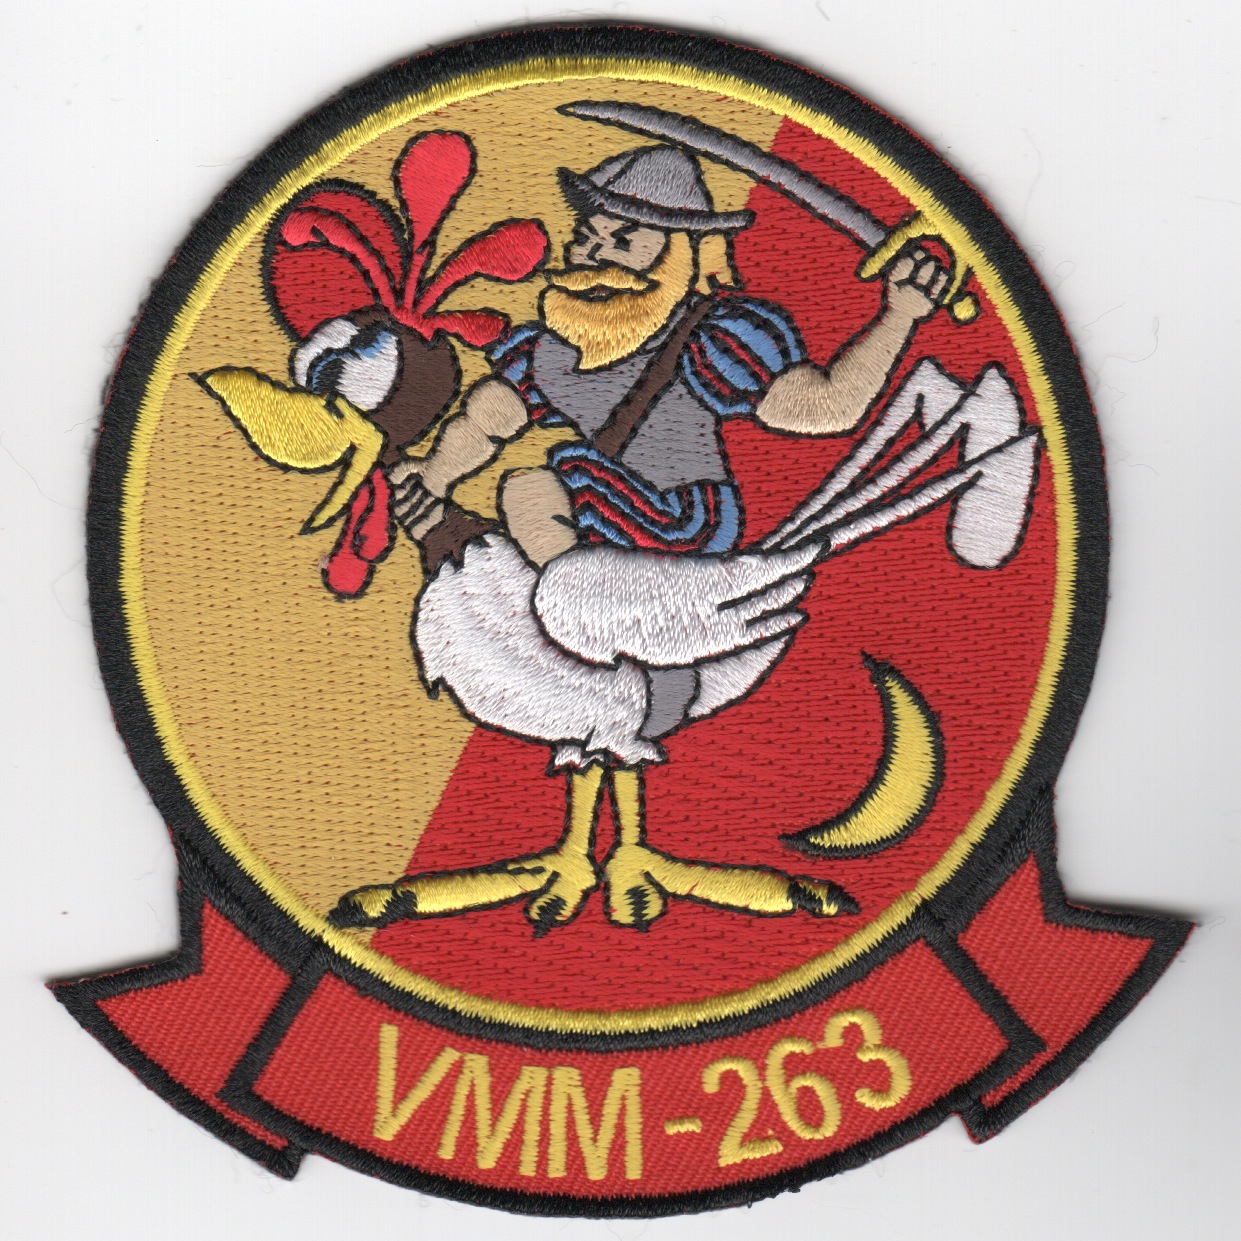 VMM-263 'Conquistador' Spain Det Patch